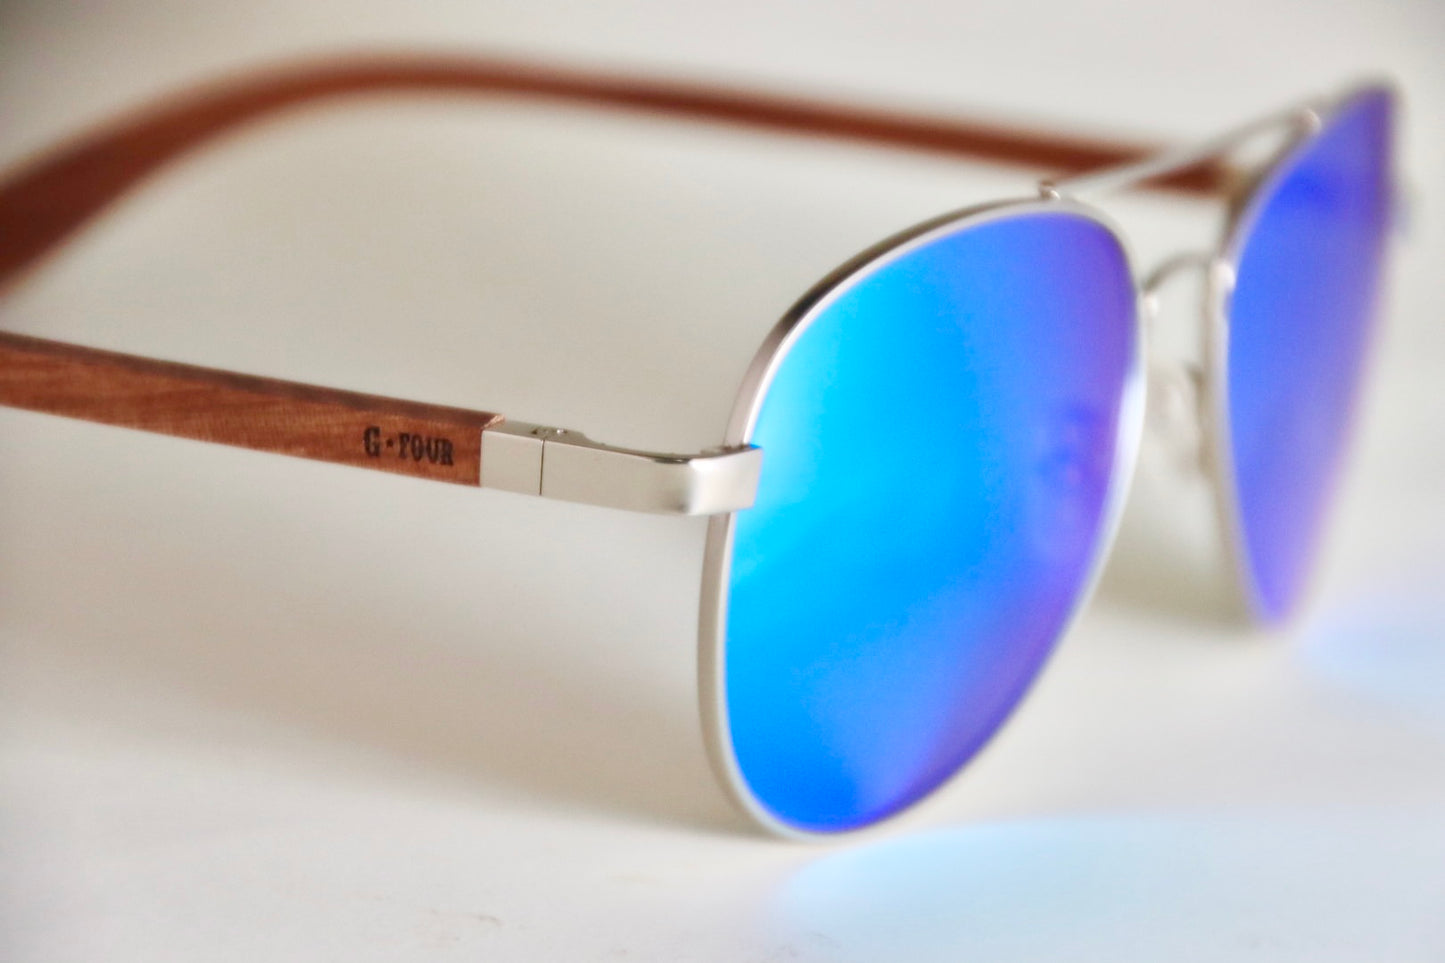 Sunglasses - “Maverick” Ice Blue